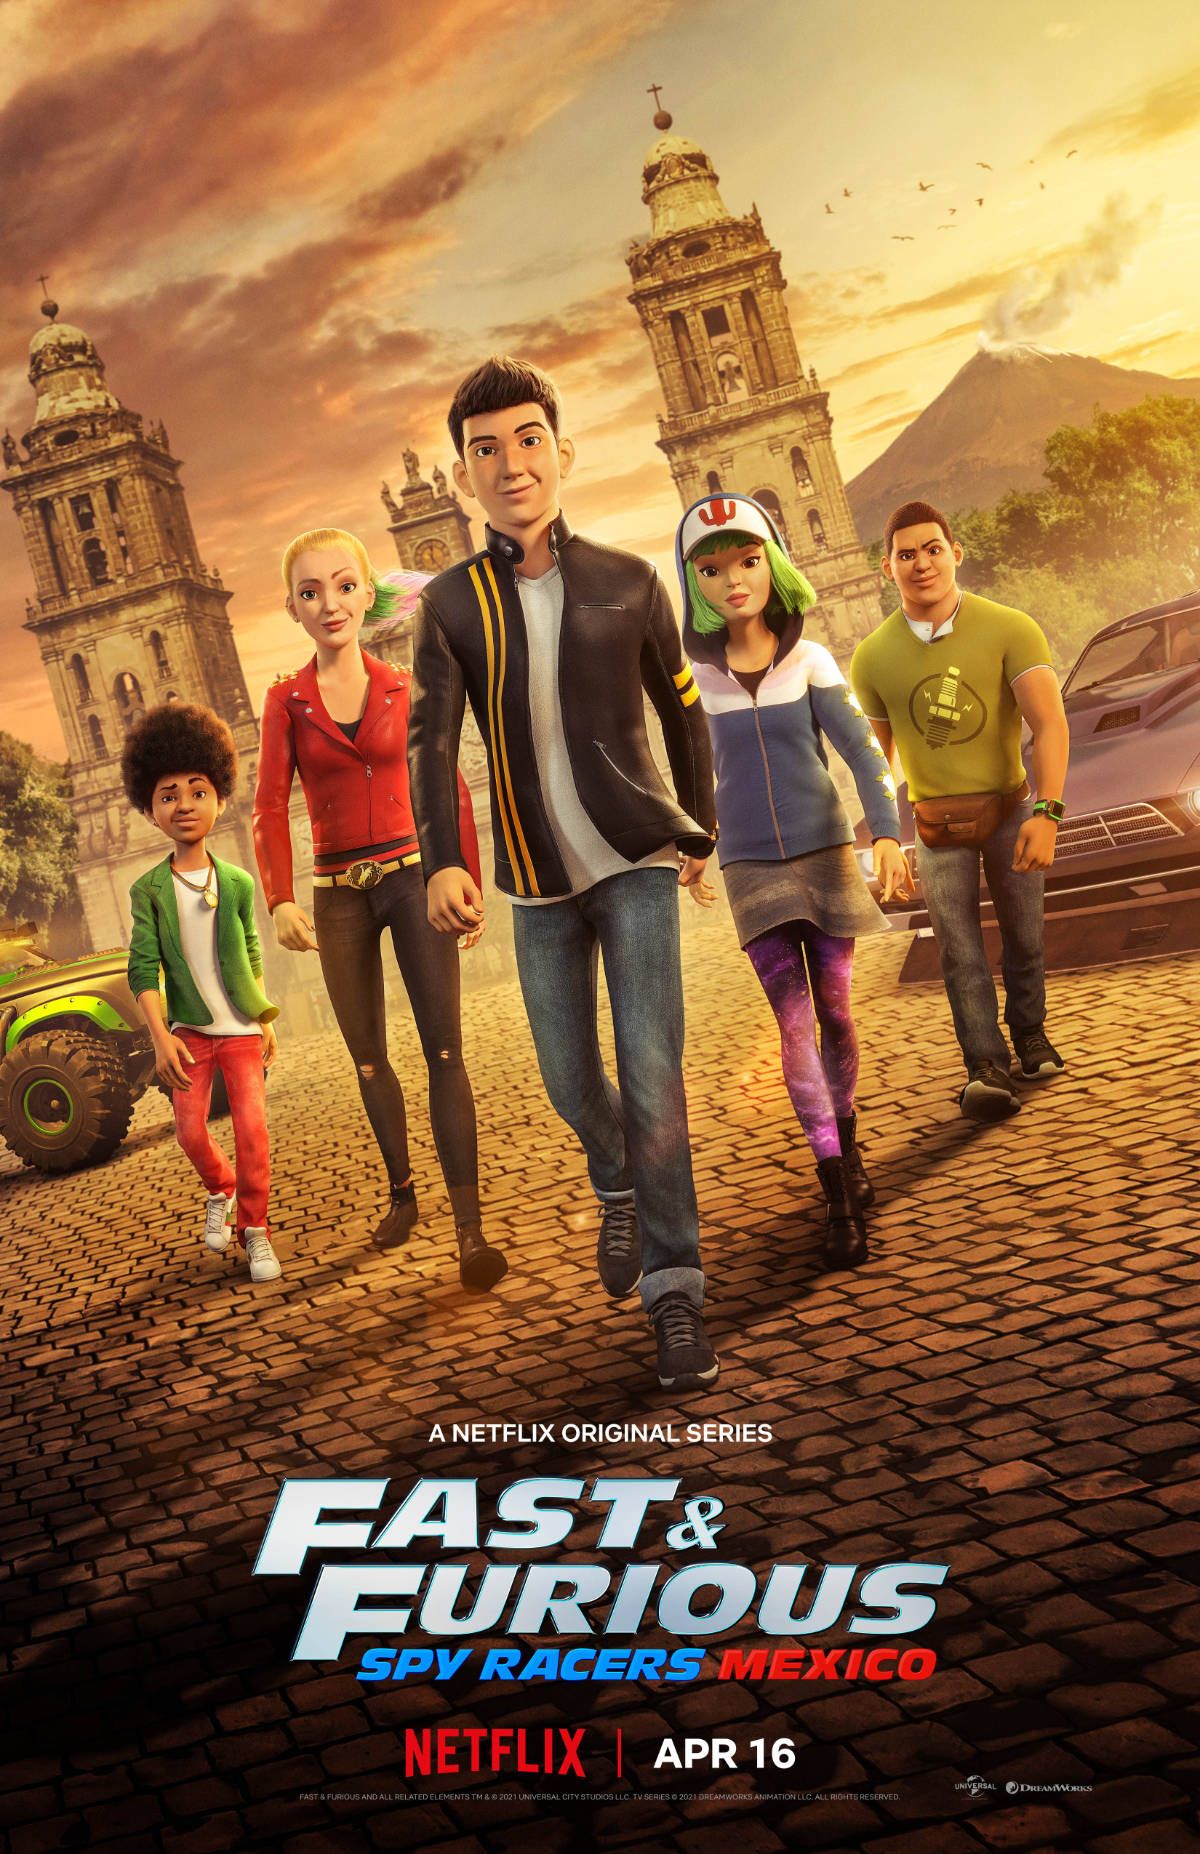 Fast & Furious: Spy Racers Season 4 Heads to Mexico